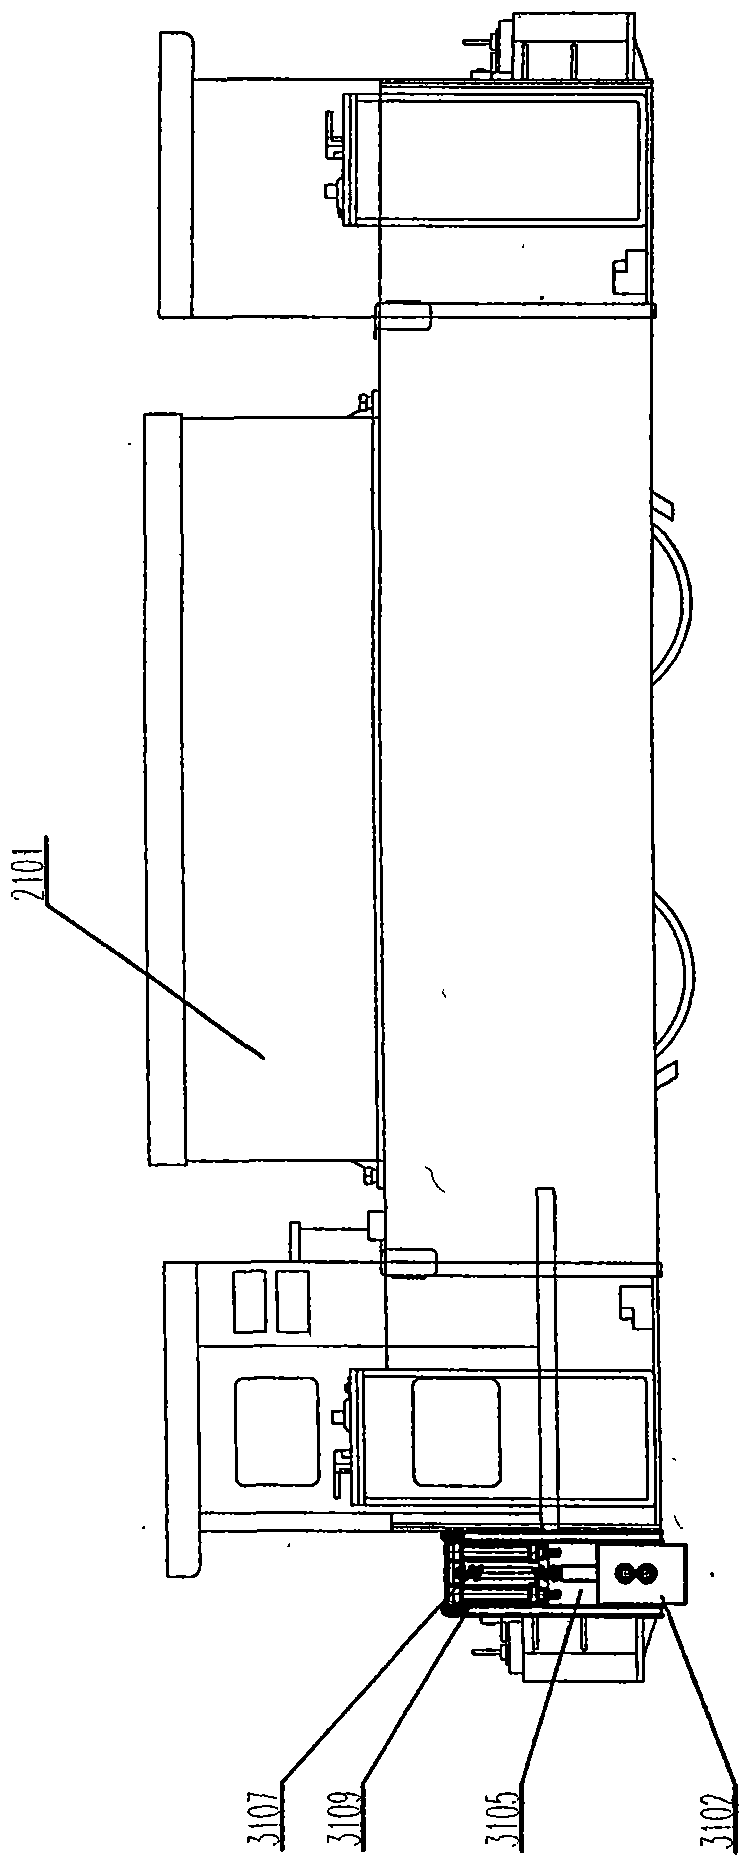 A locomotive traction braking method